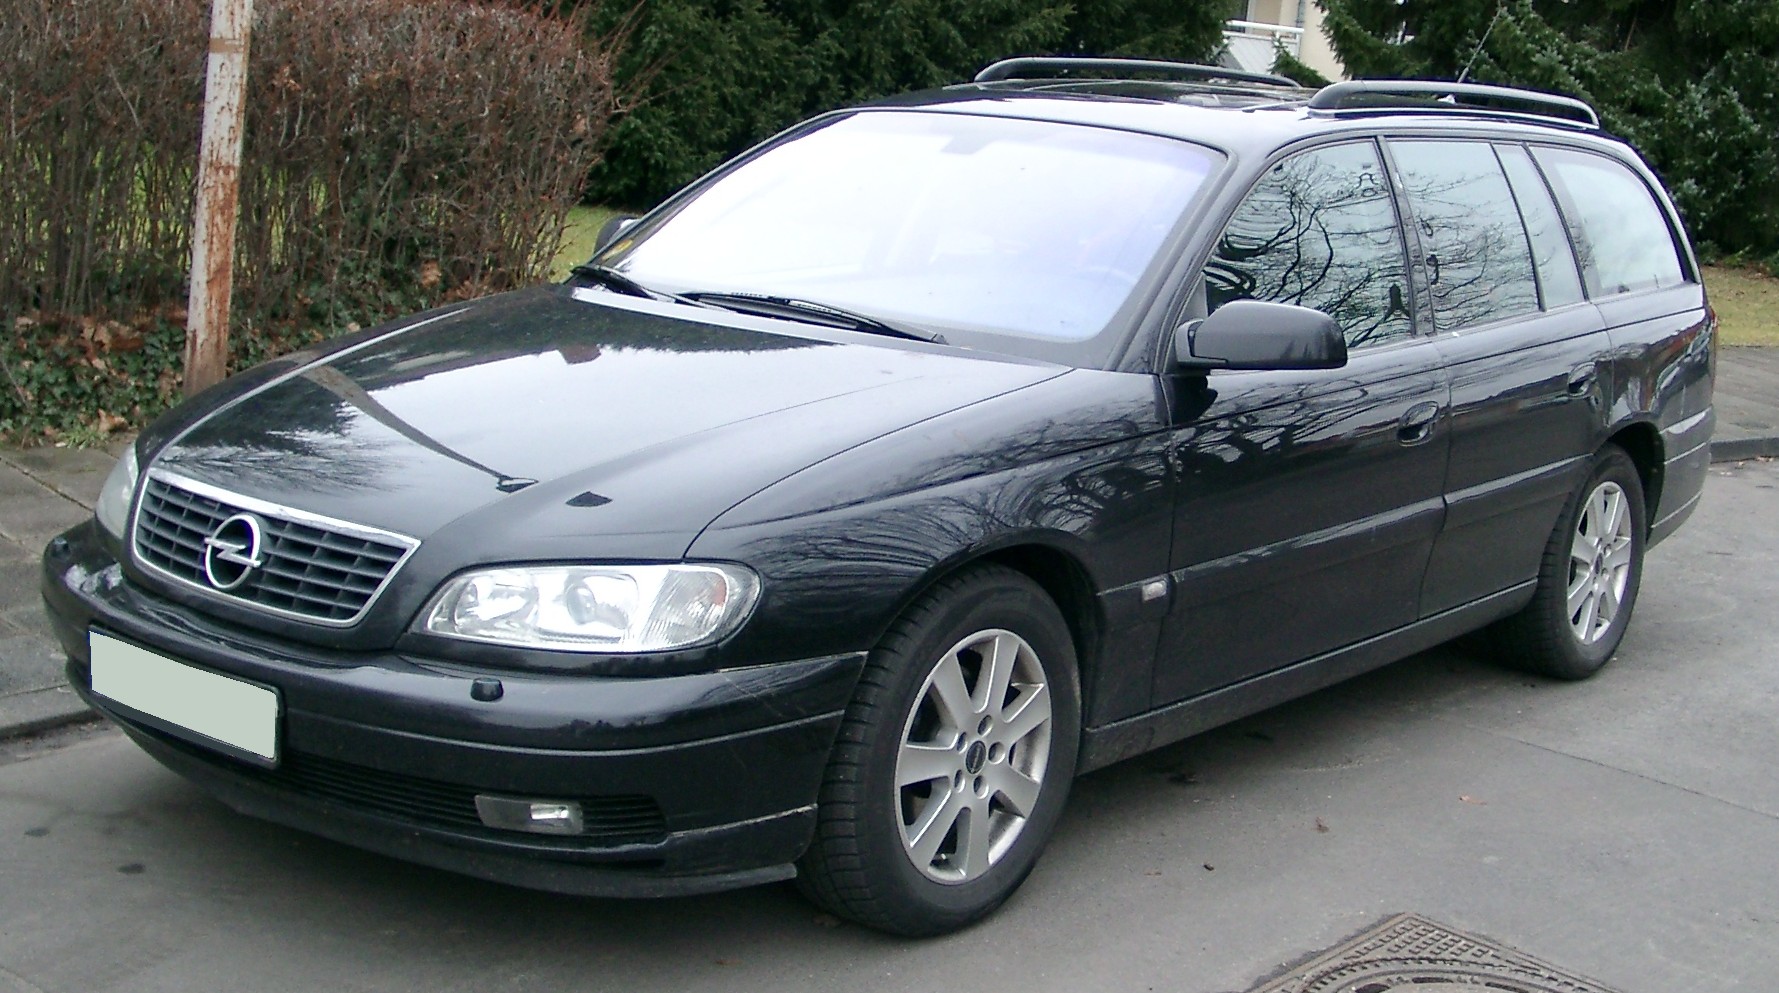 File:Opel Omega Kombi front 20080118.jpg